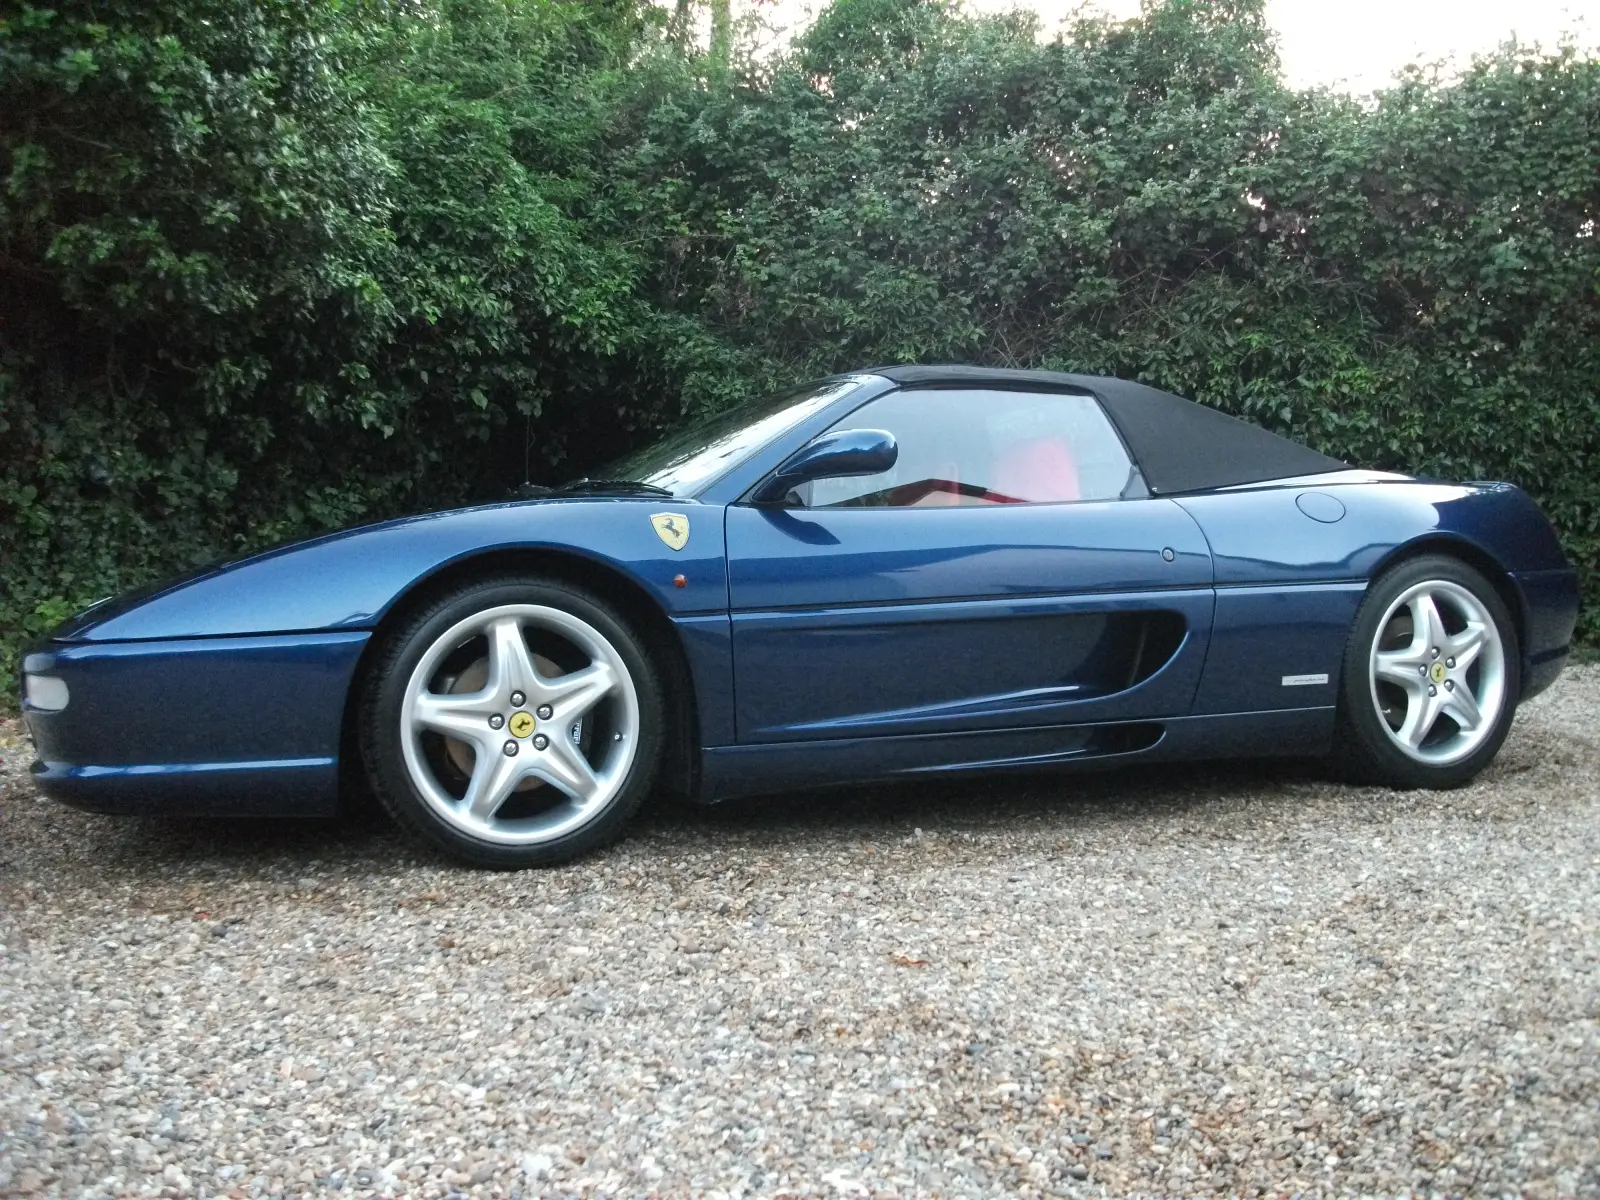 355 ferrari for sale - How many Ferrari 355 are there